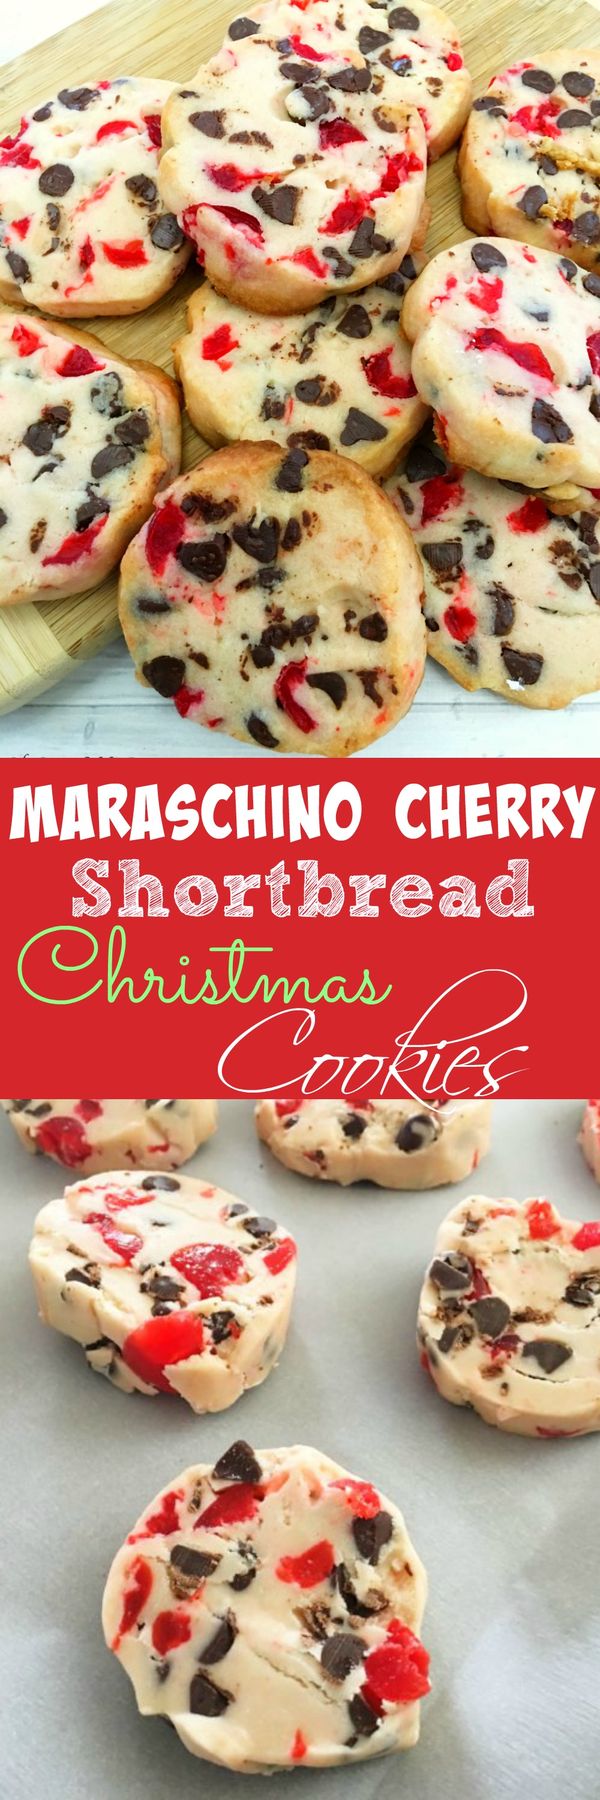 Maraschino Cherry Shortbread Christmas Cookies